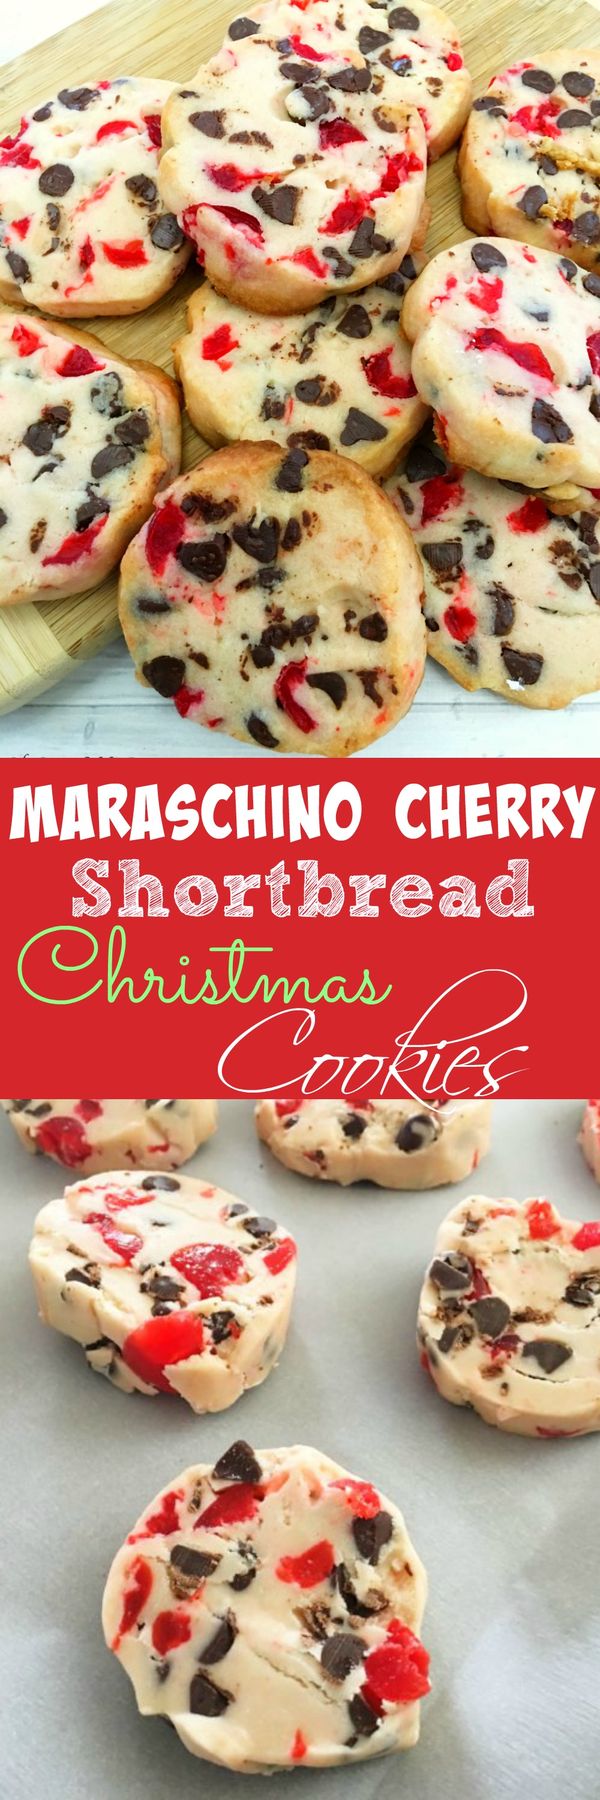 Maraschino Cherry Shortbread Christmas Cookies